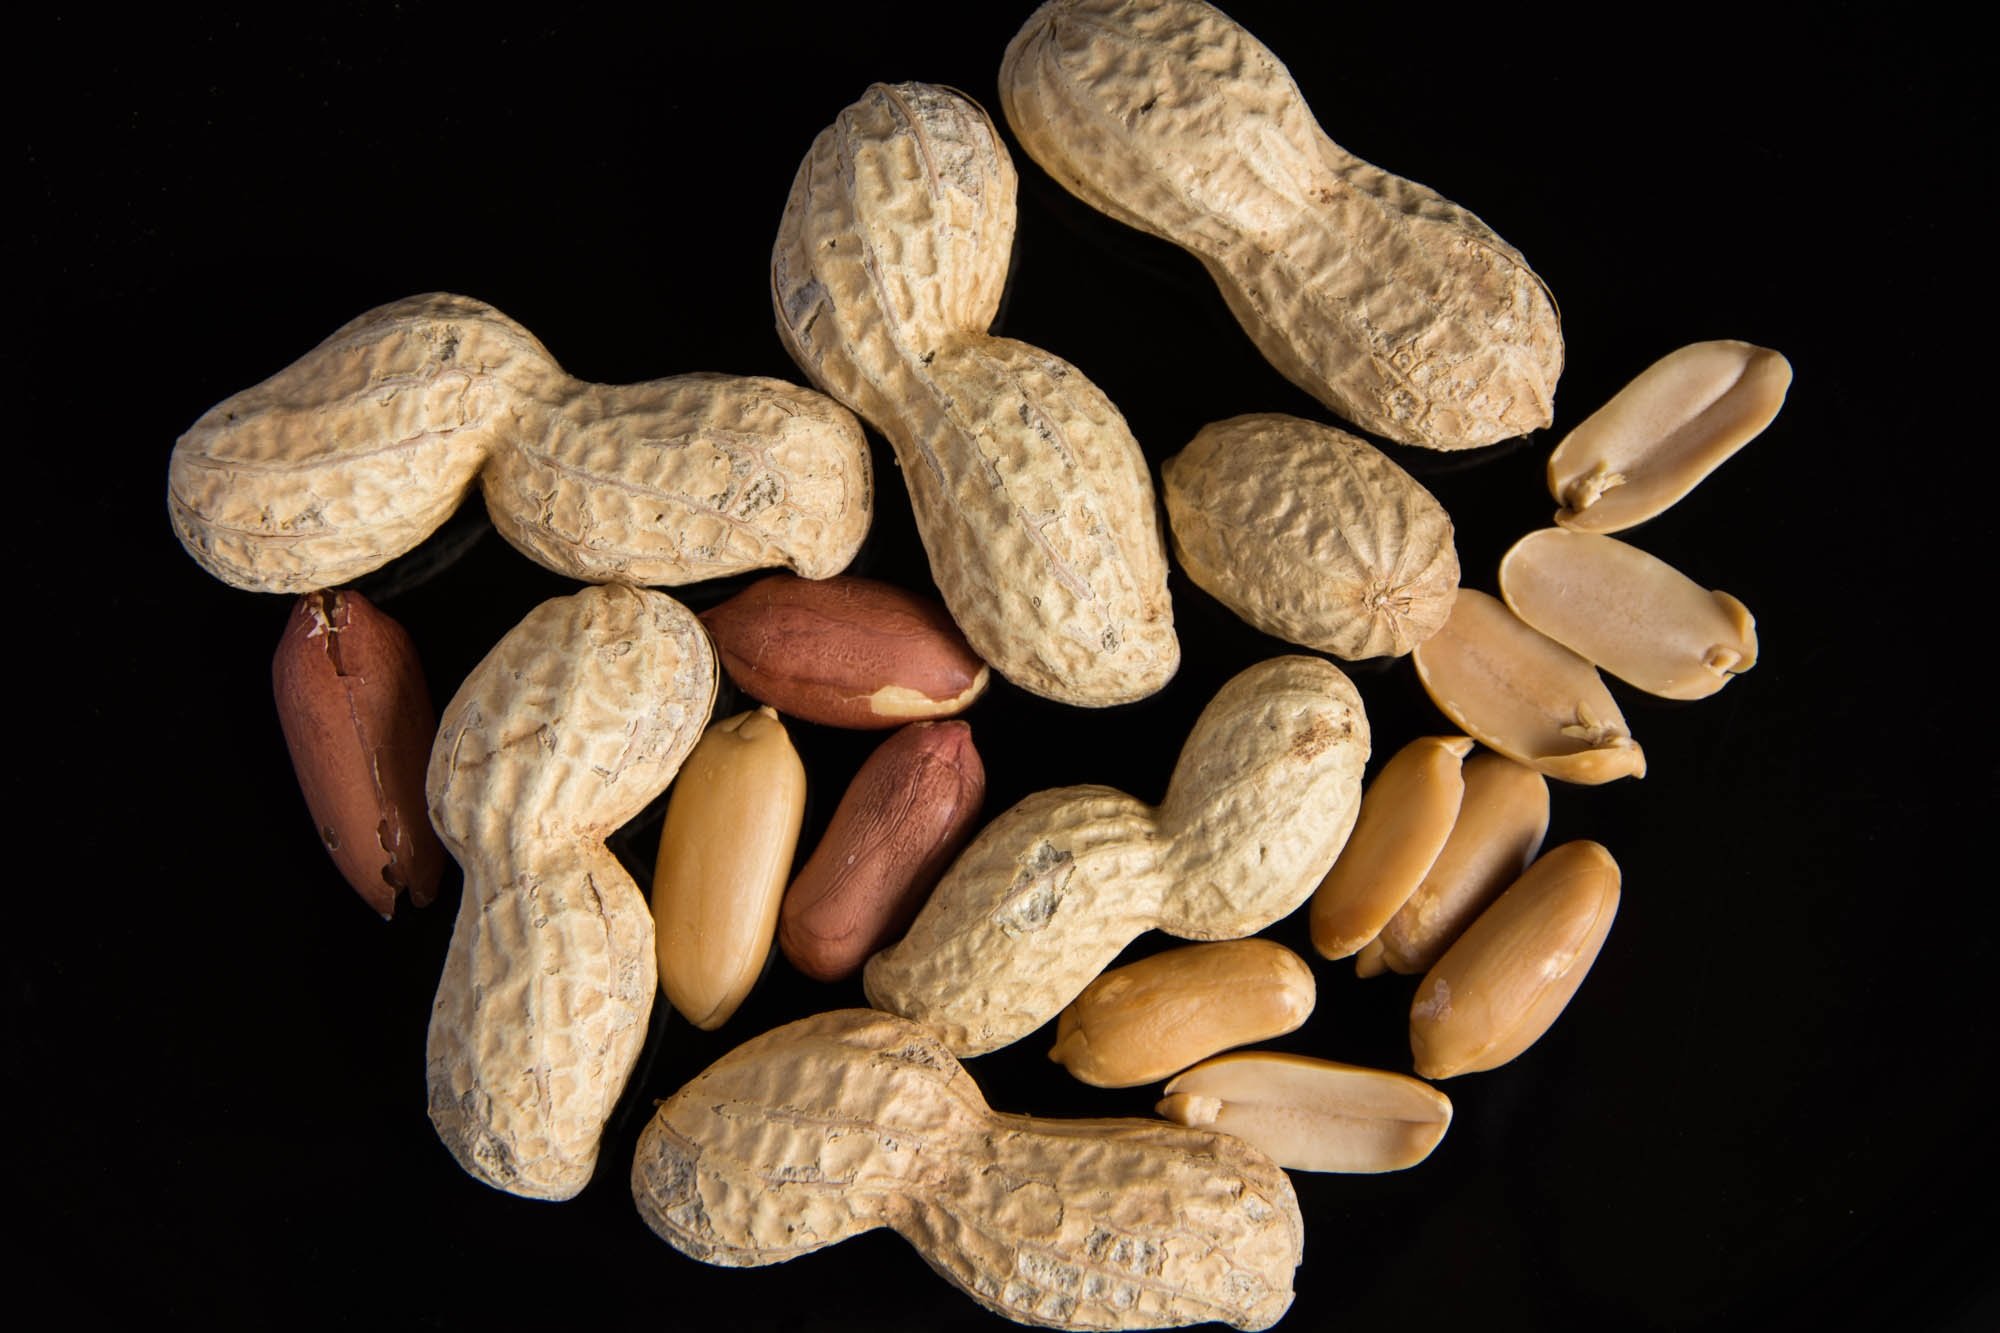 Земляной арахис. Земляной орех арахис. Арахис Peanuts. Арахис культурный Земляной орех. Орехи в темноте